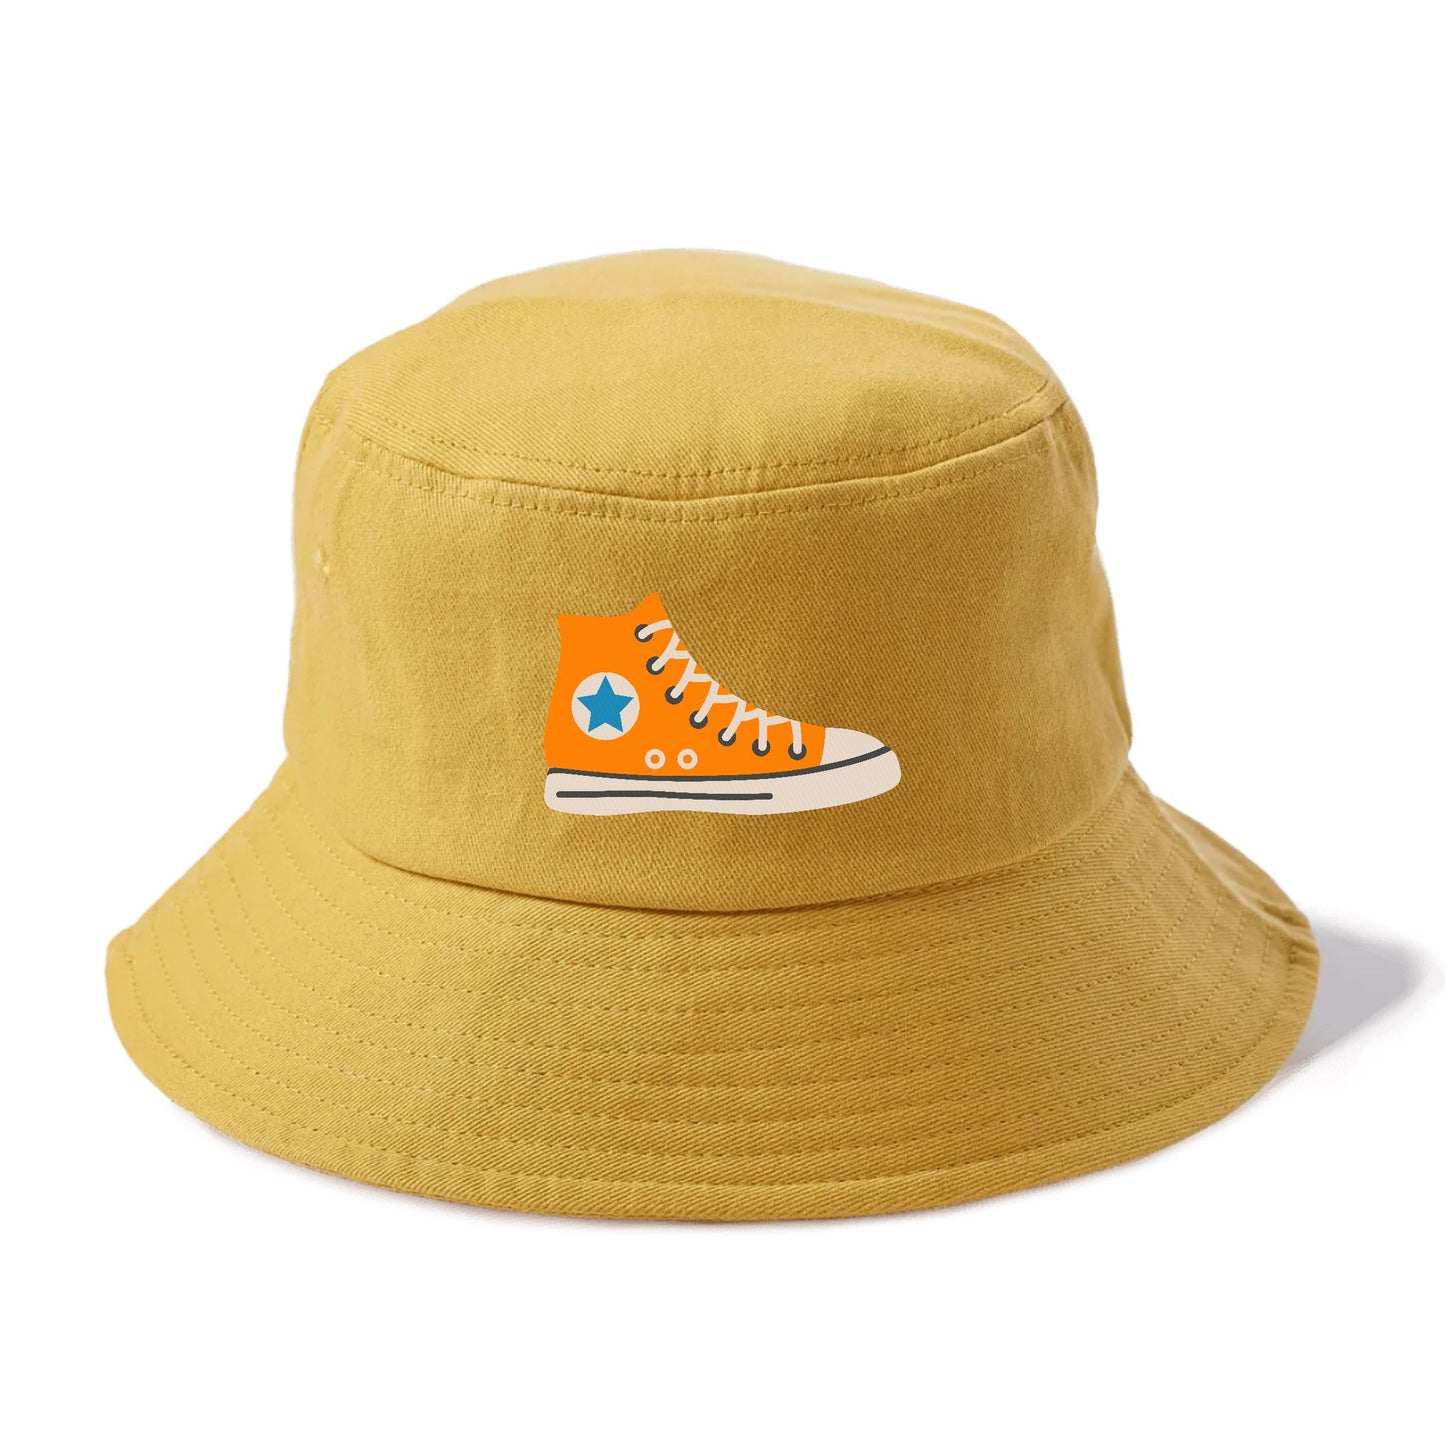 Retro 80s Converse Shoe Orange Hat